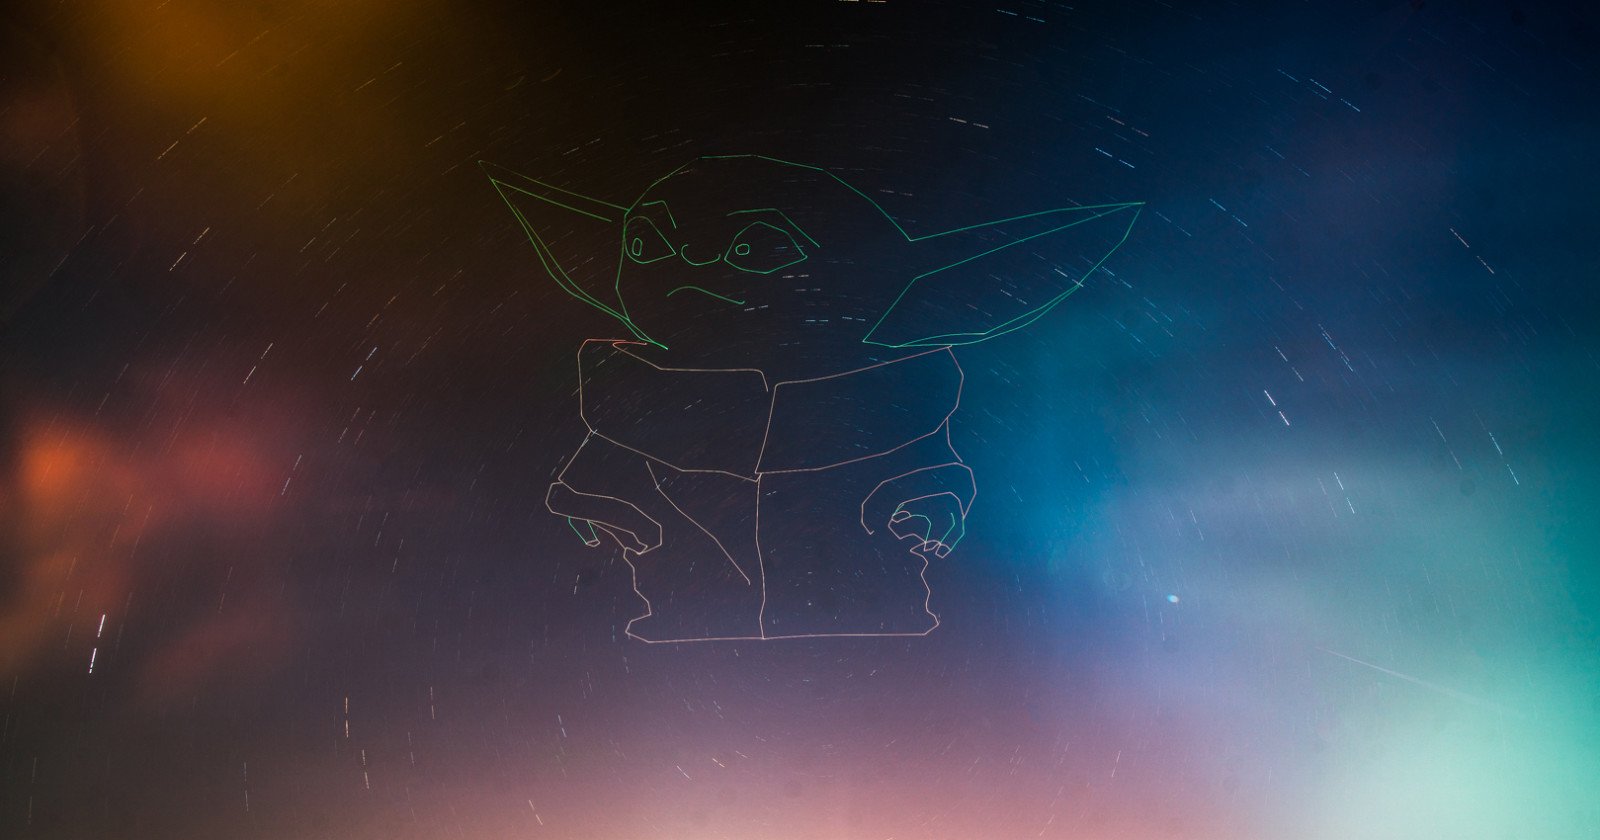 Este fotógrafo usó un zángano para pintar con luz un bebé gigante Yoda en el cielo